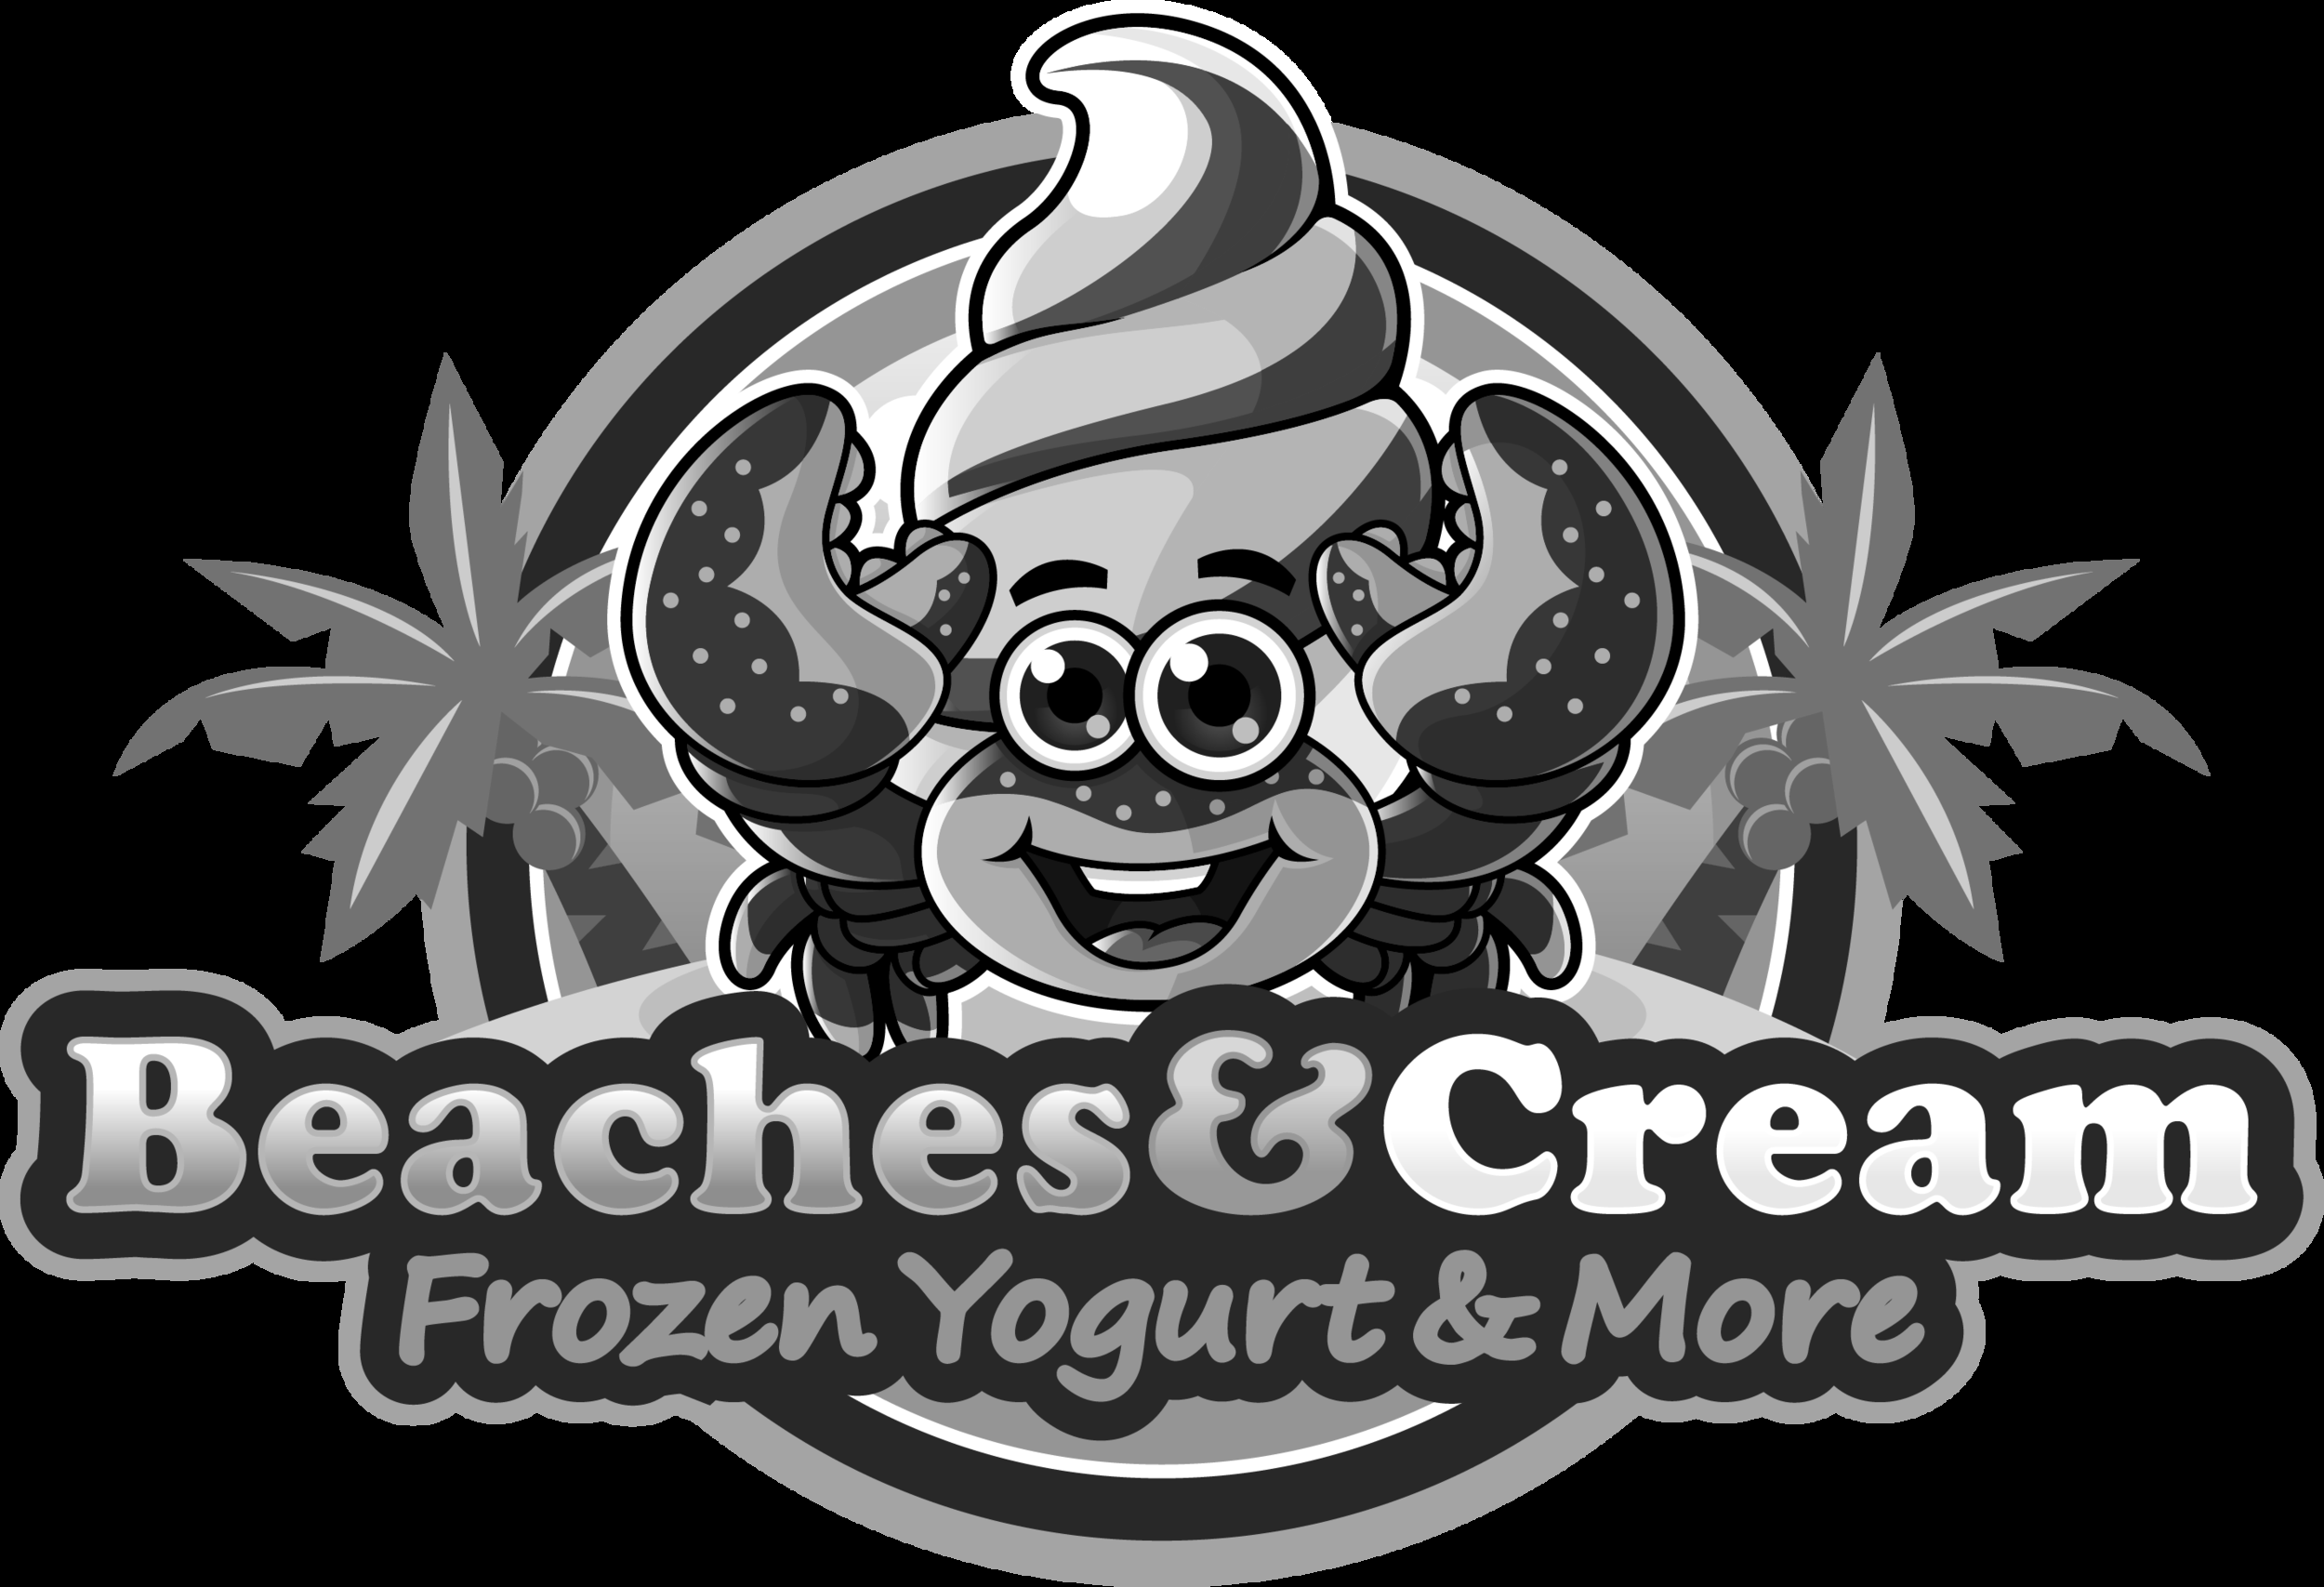 Beaches&Cream Logo.png